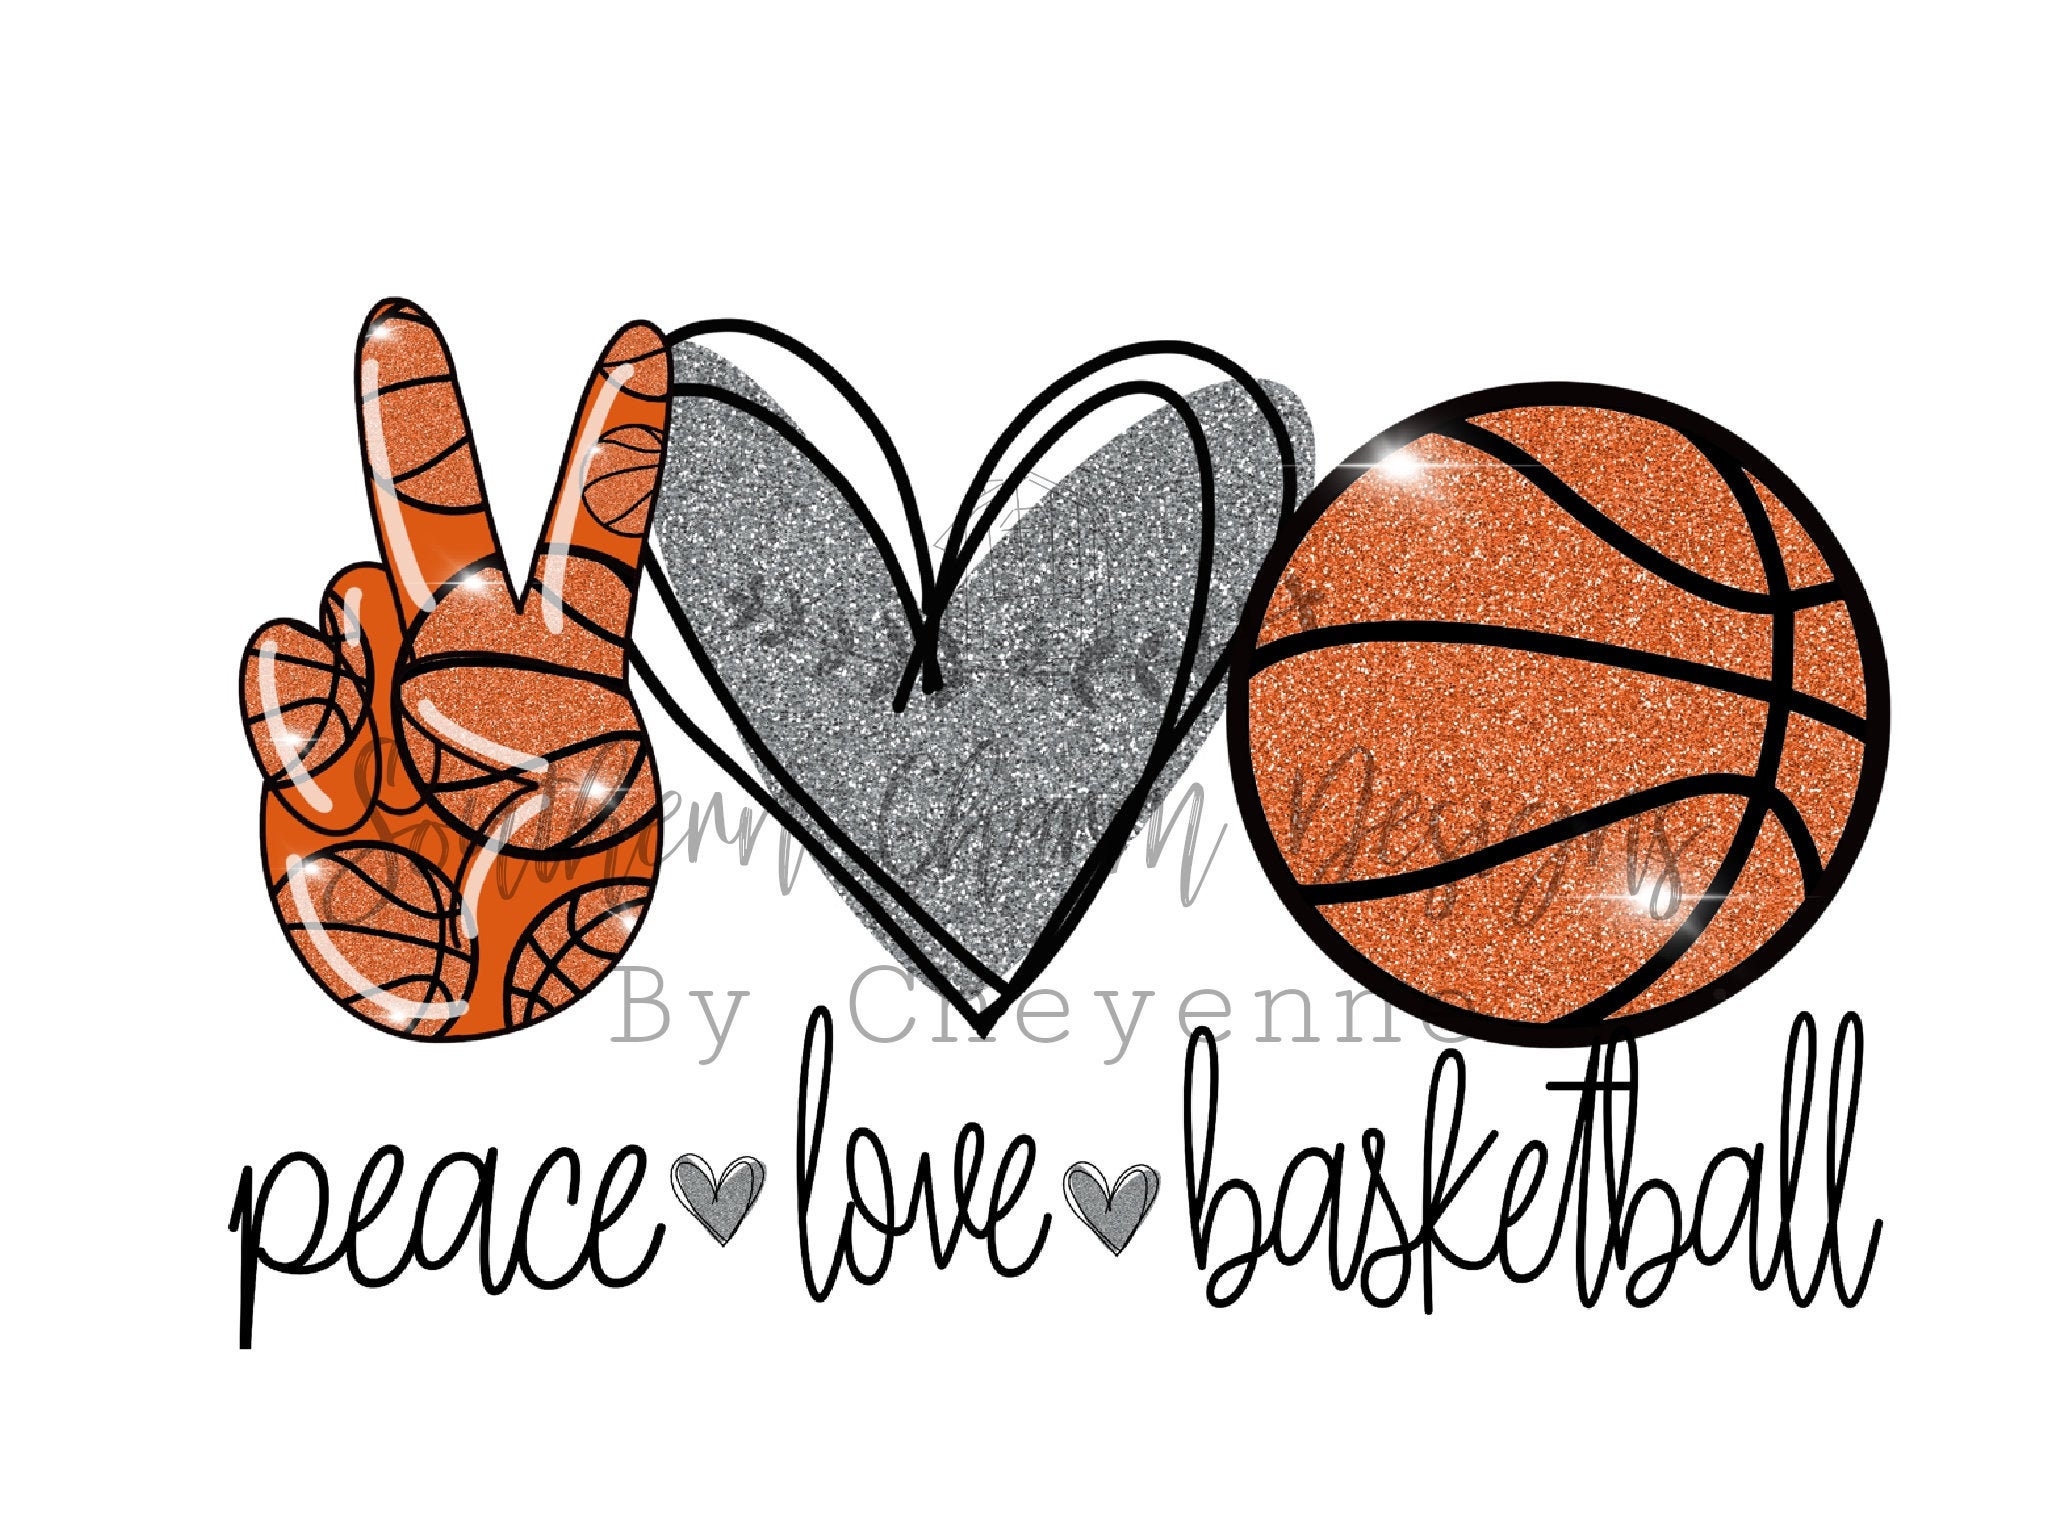 love and basketball symbol